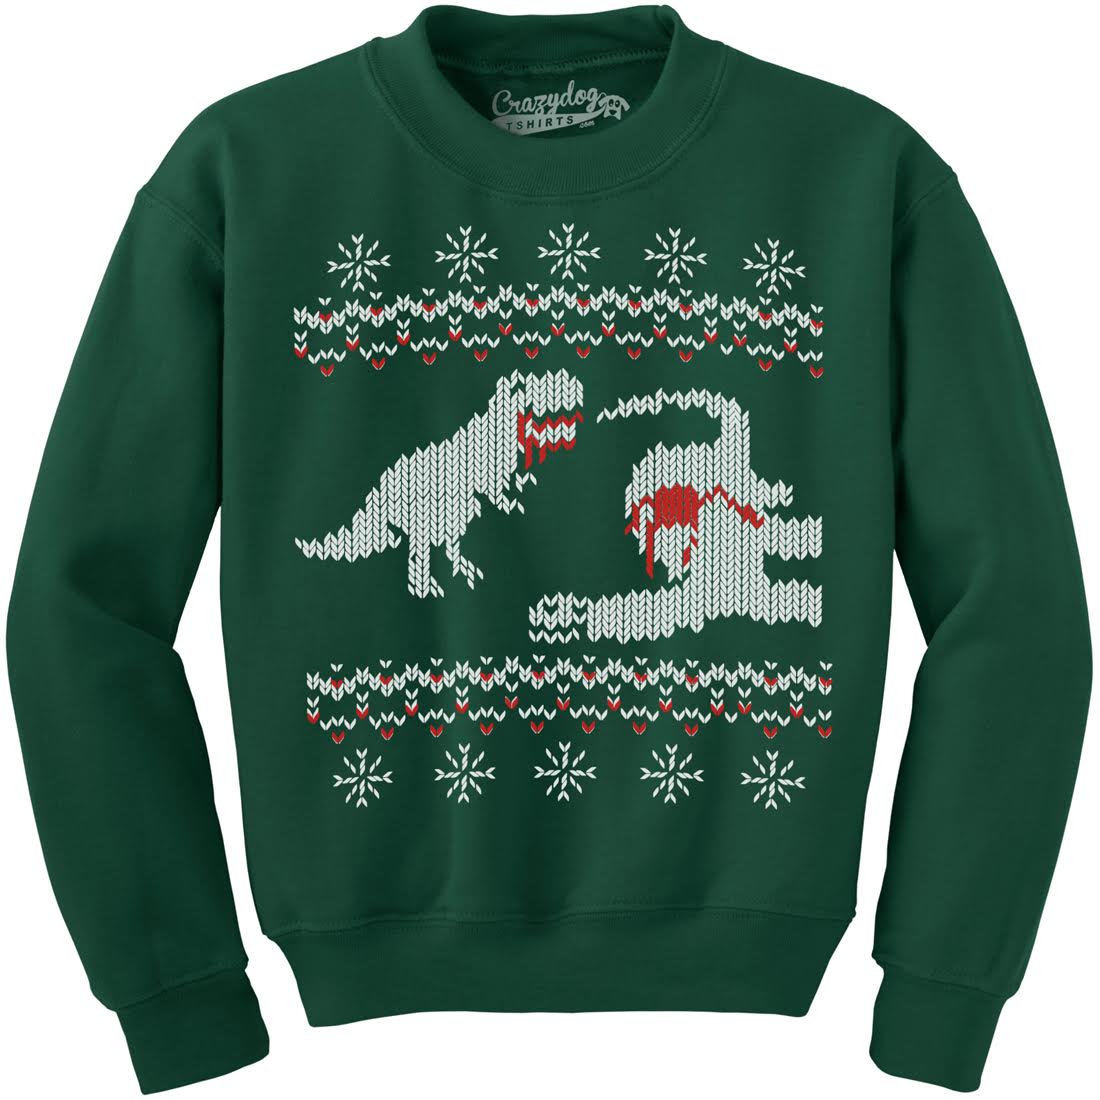 Funny Forest Green Dinosaur Snack Sweatshirt Nerdy Christmas Dinosaur Ugly Sweater Tee